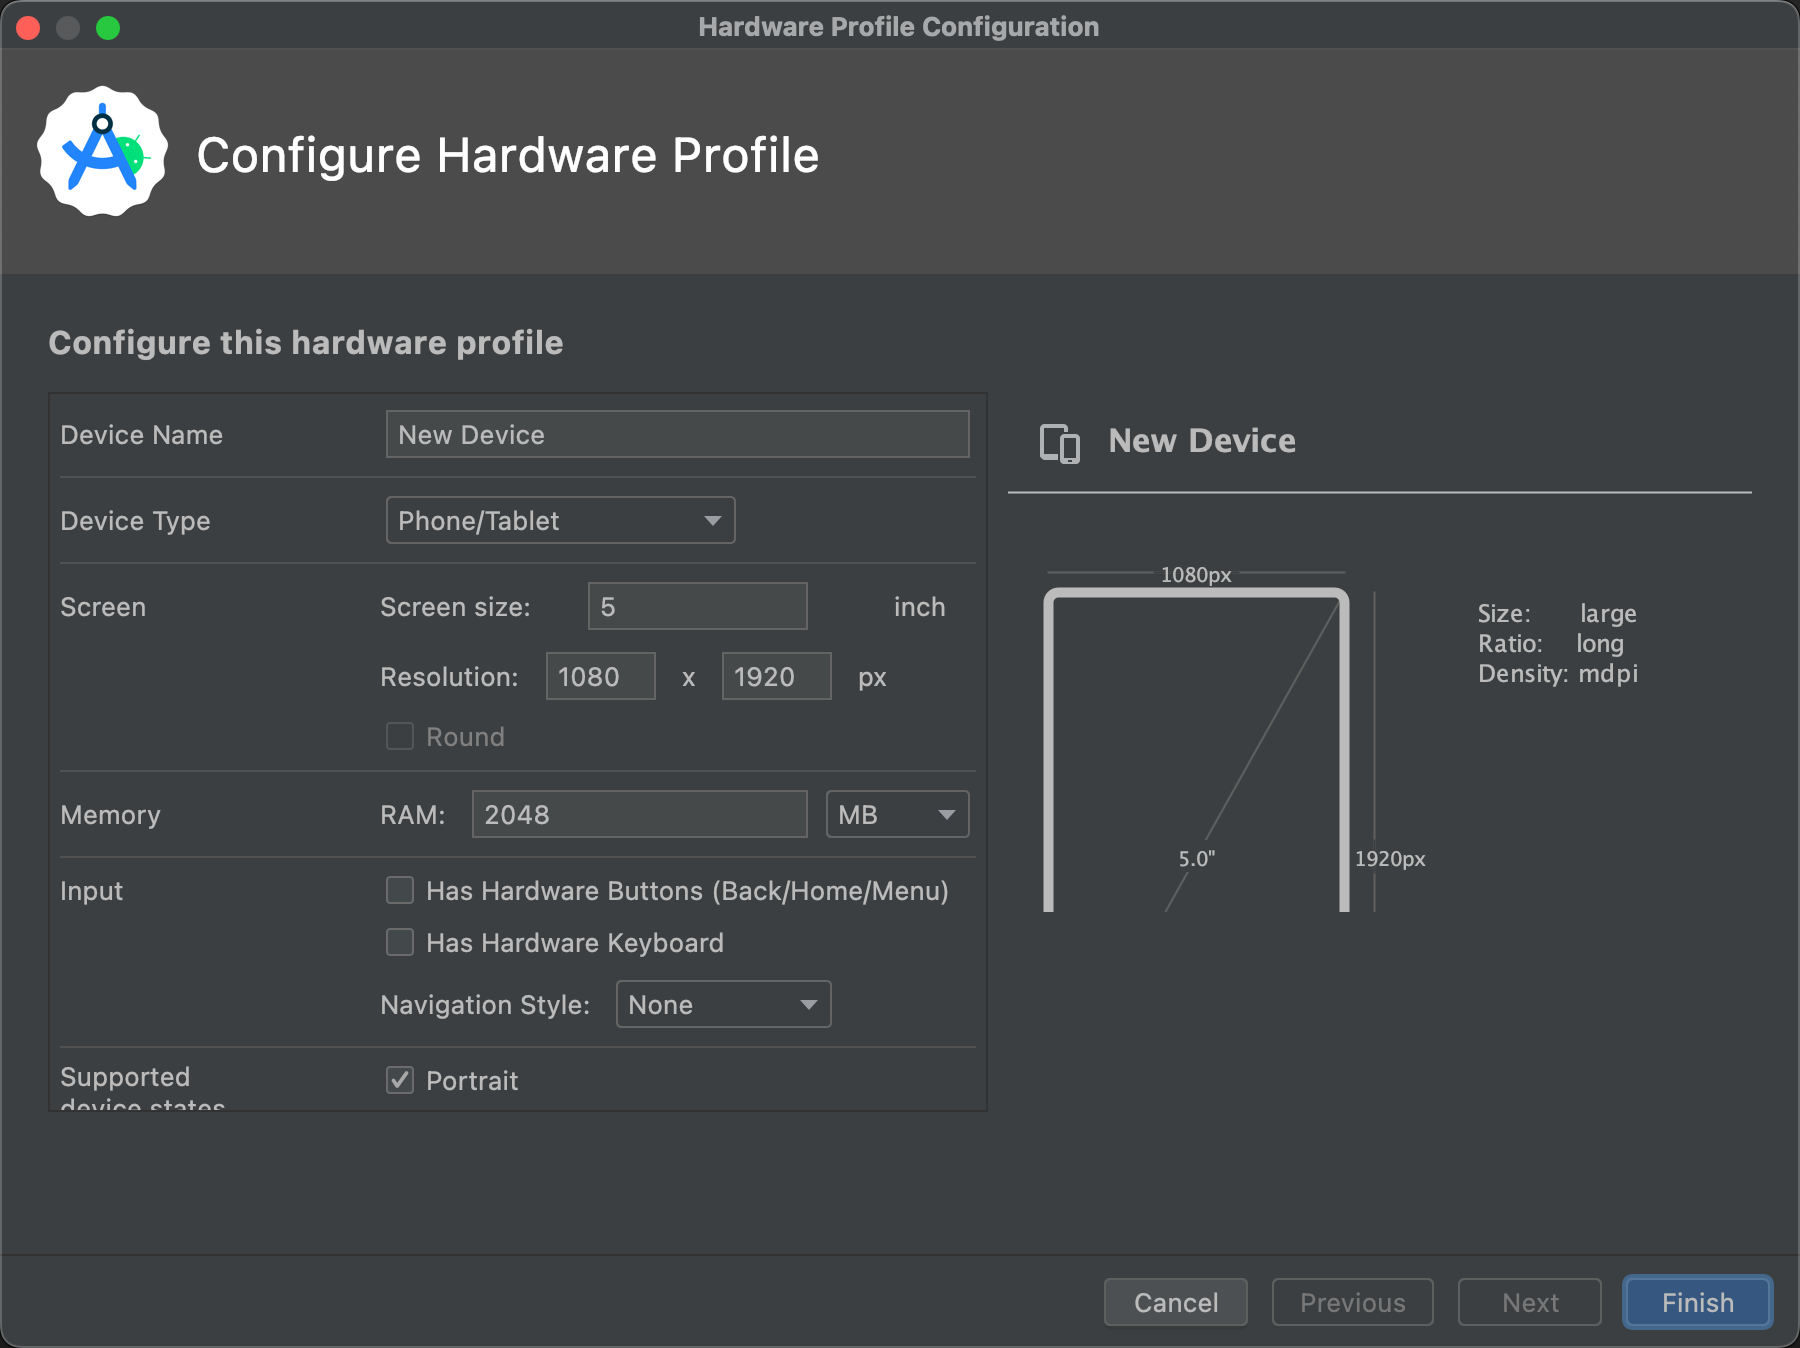 The Configure hardware profile dialog